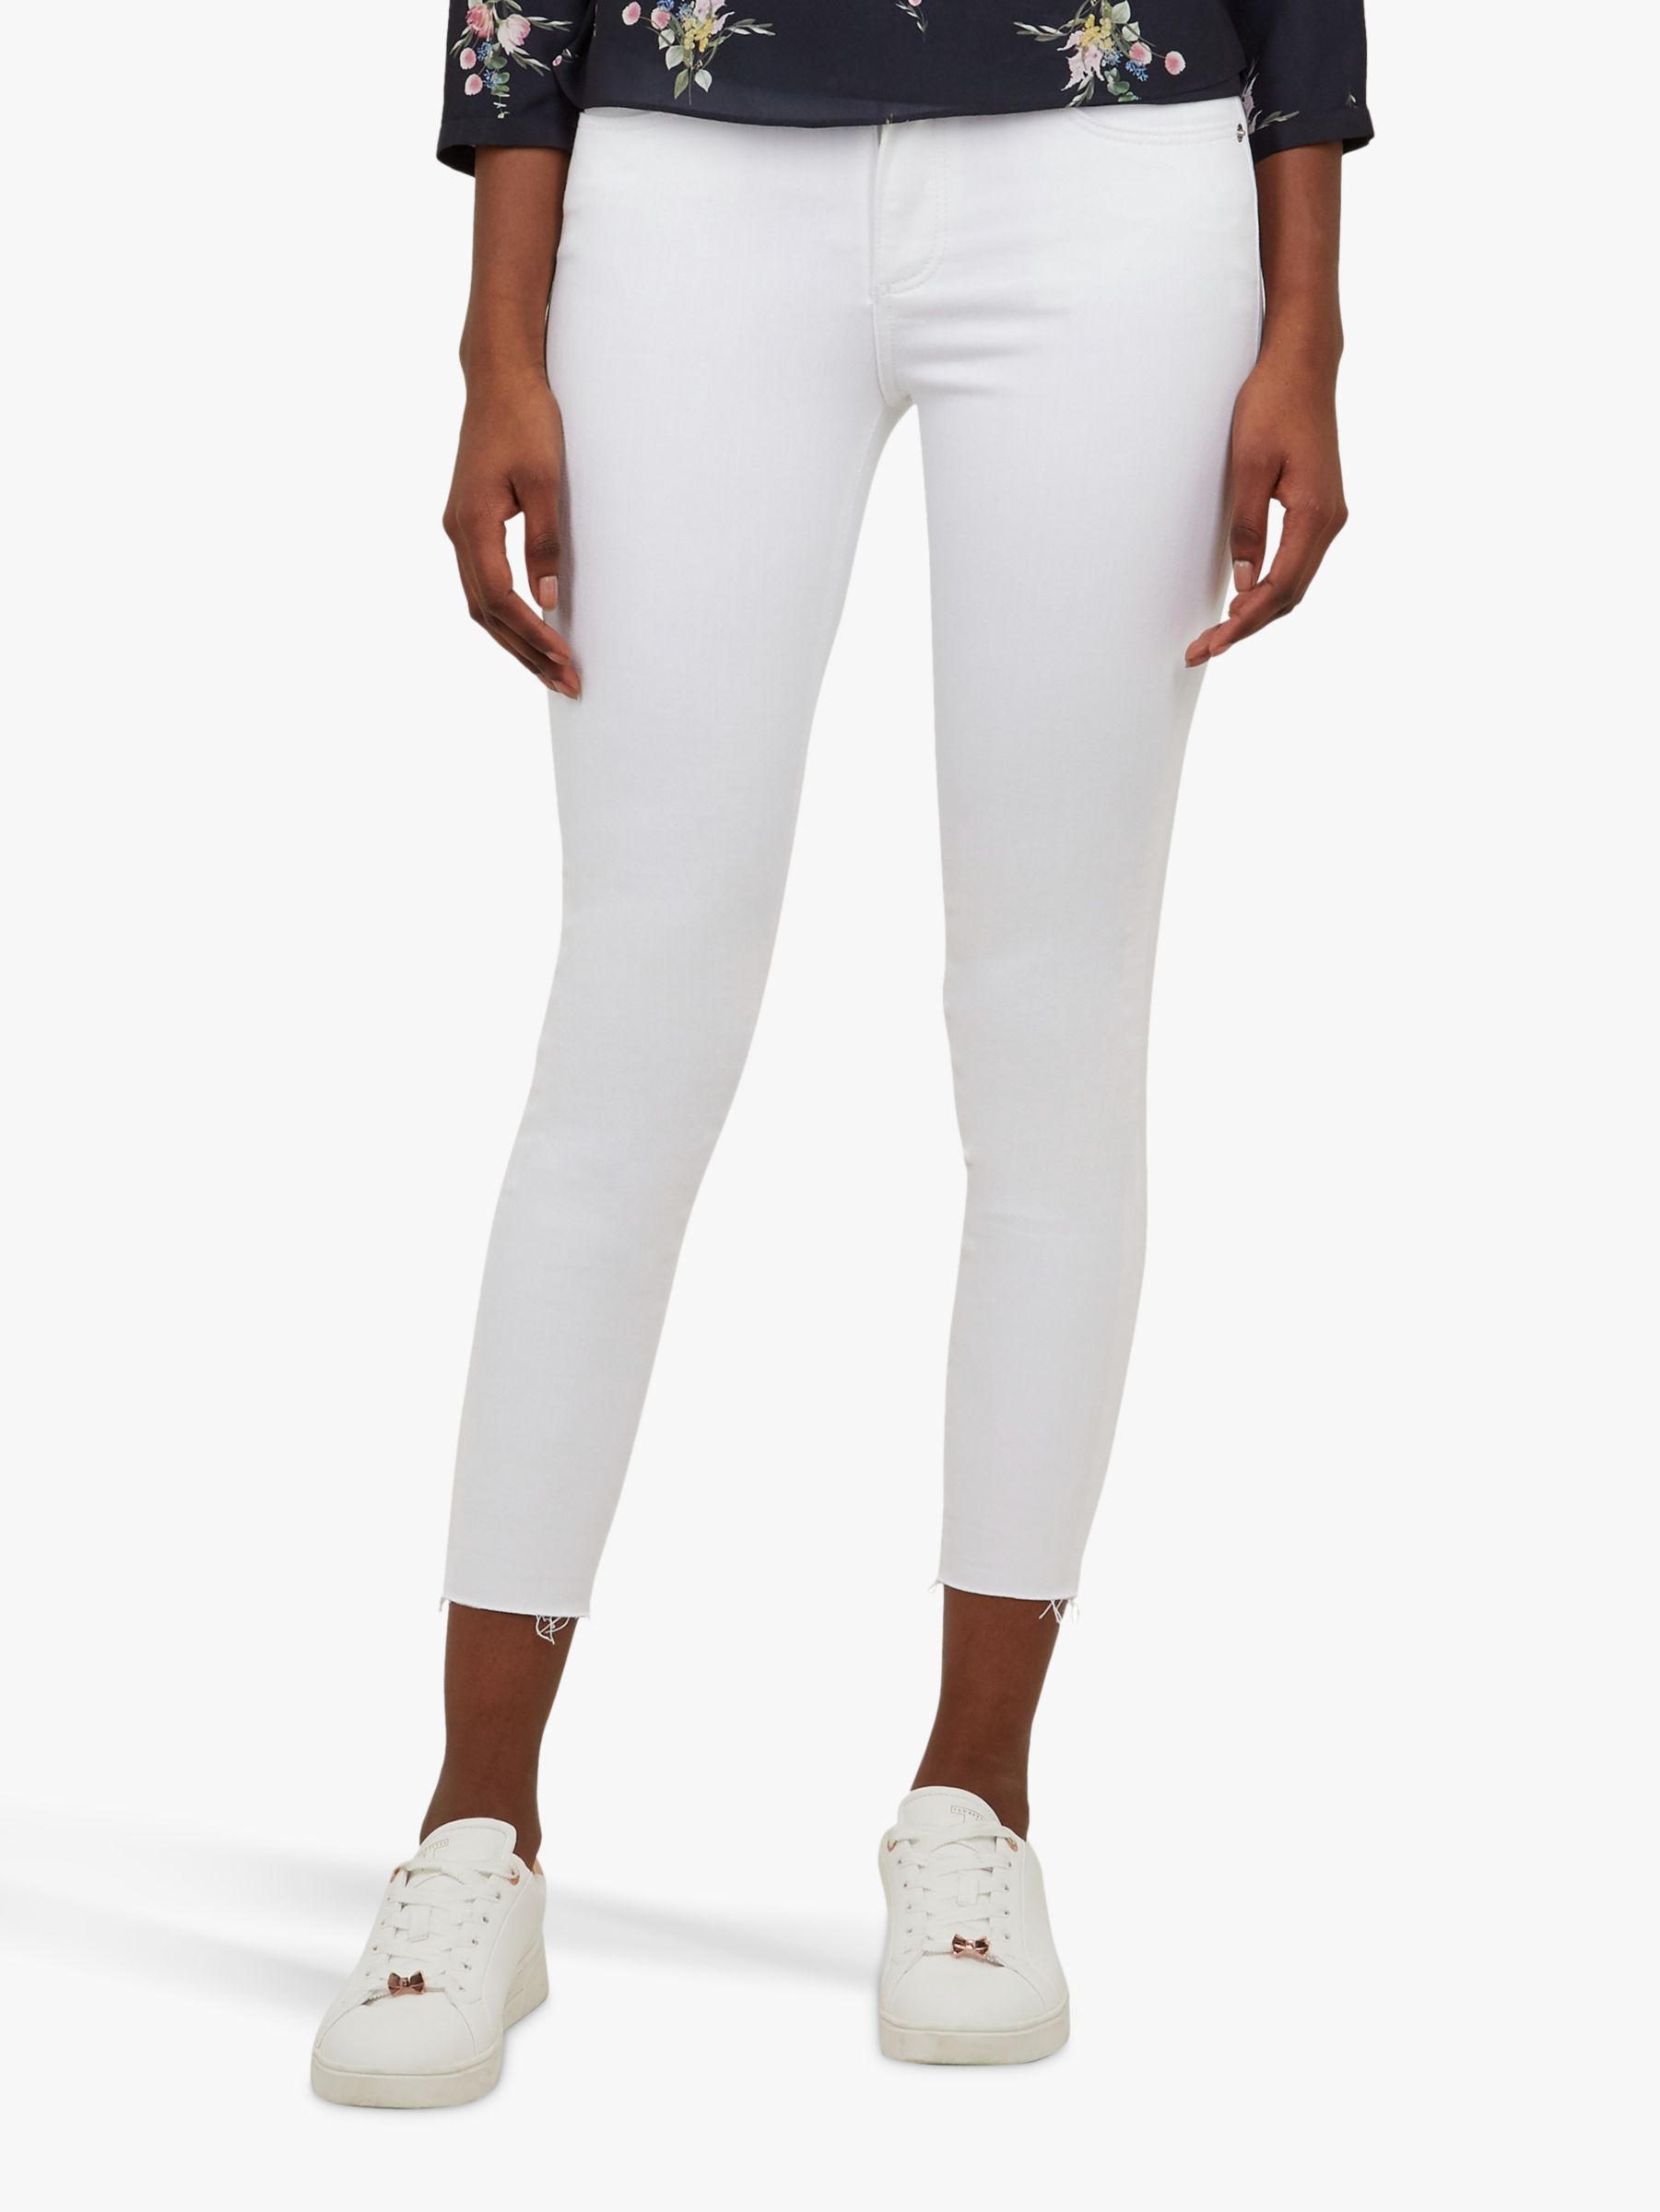 white frayed skinny jeans